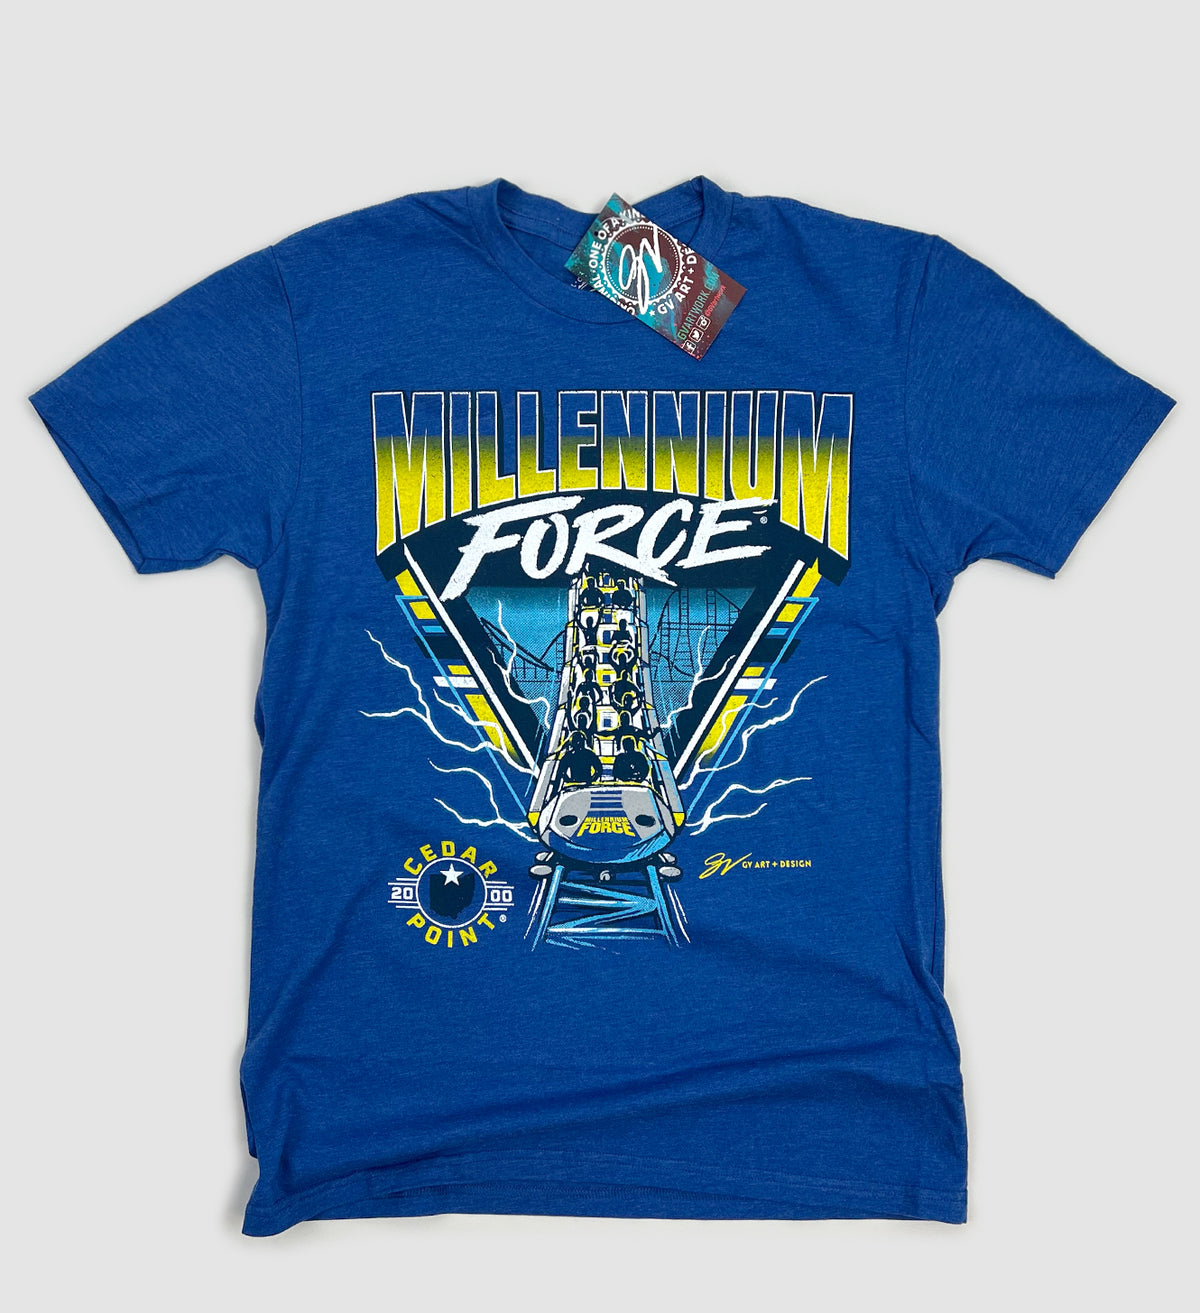 Millennium Force Triangle T shirt